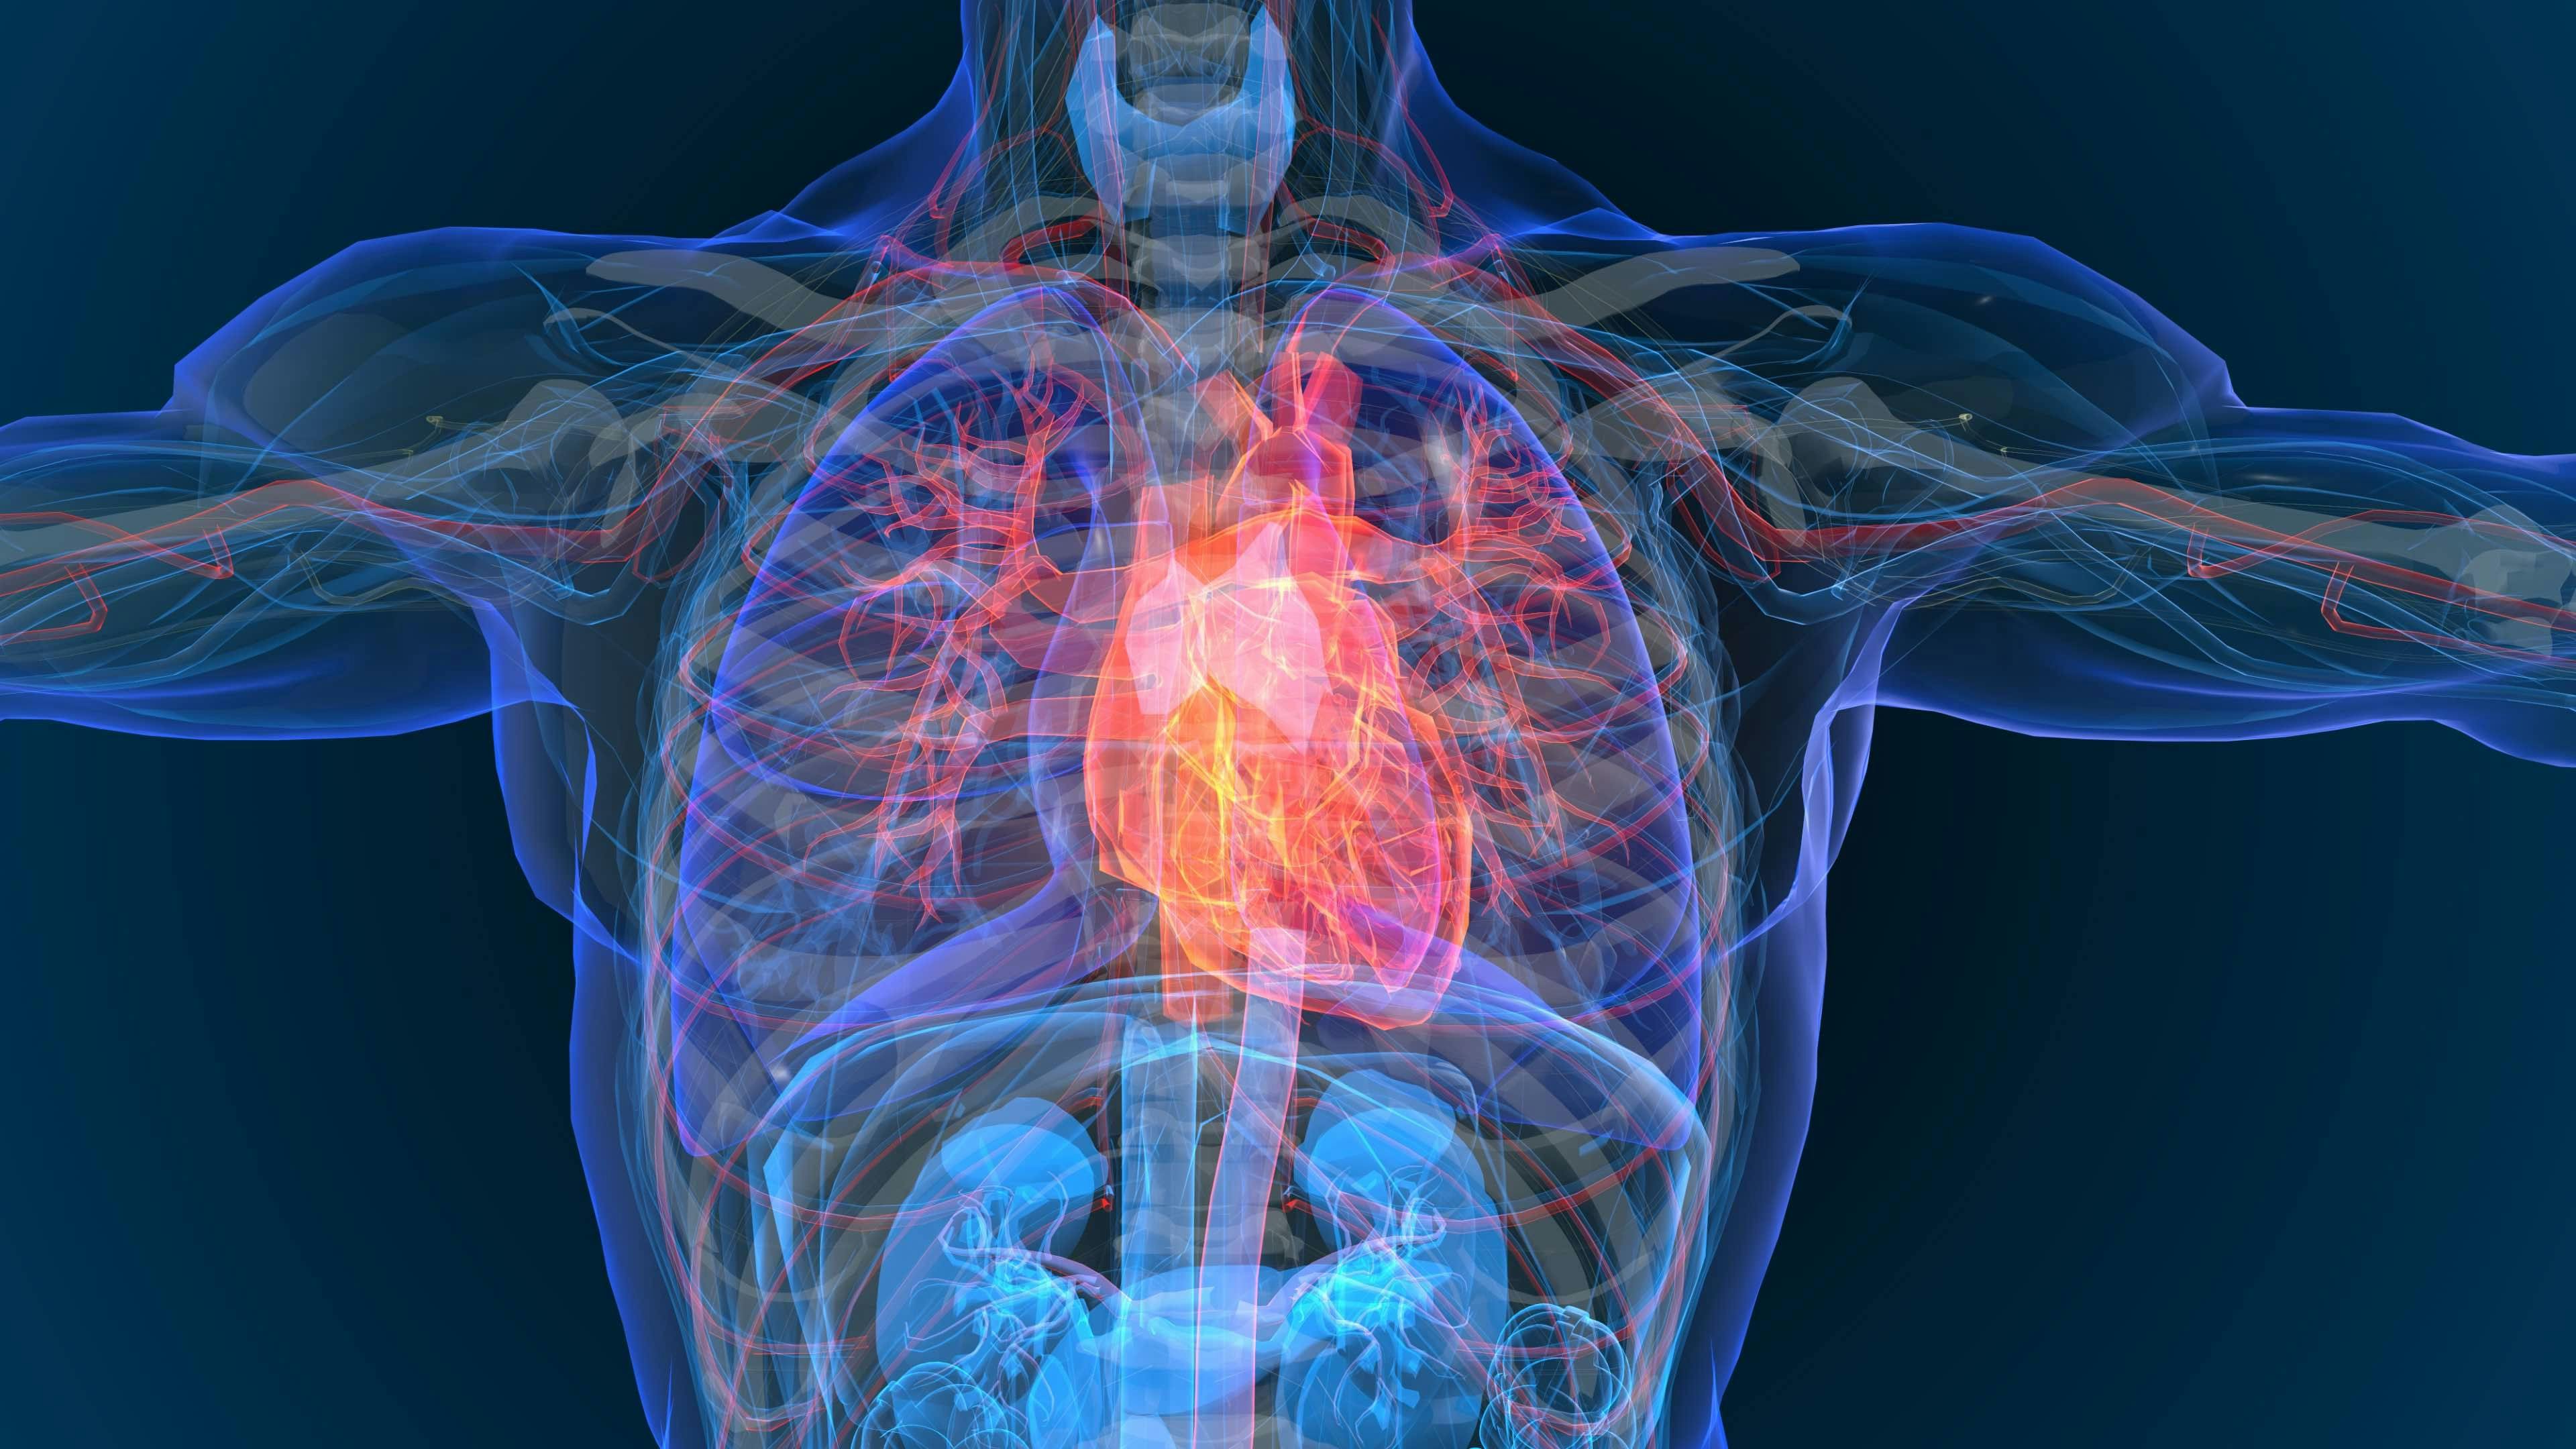 Cardiovascular system | Image credit: appledesign - stock.adobe.com